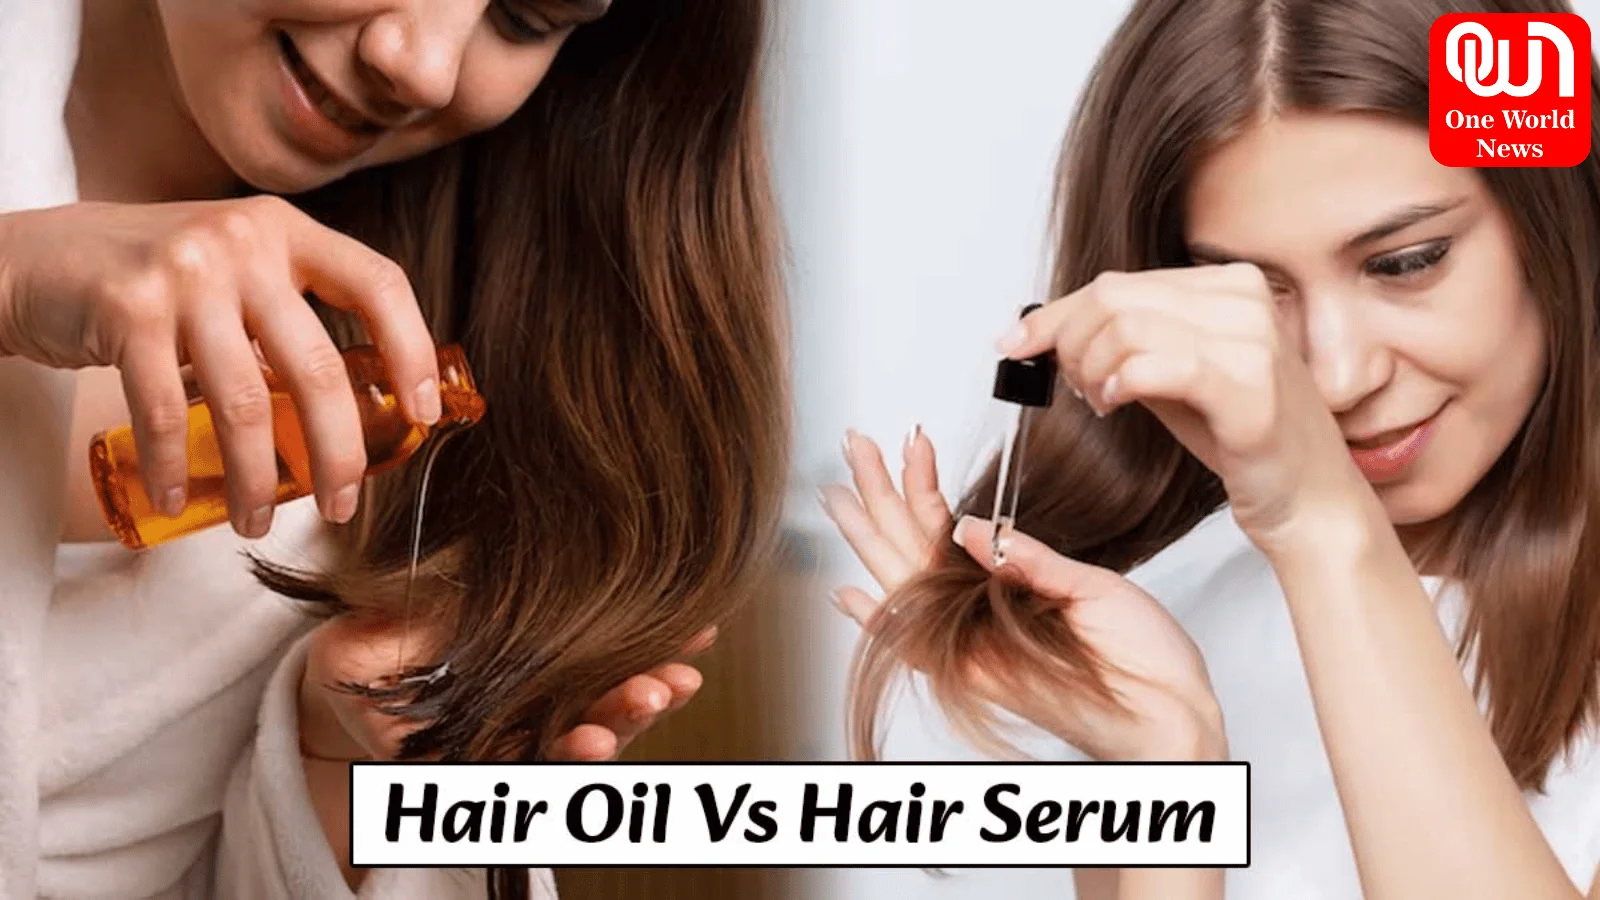 Hair Oils vs. serums